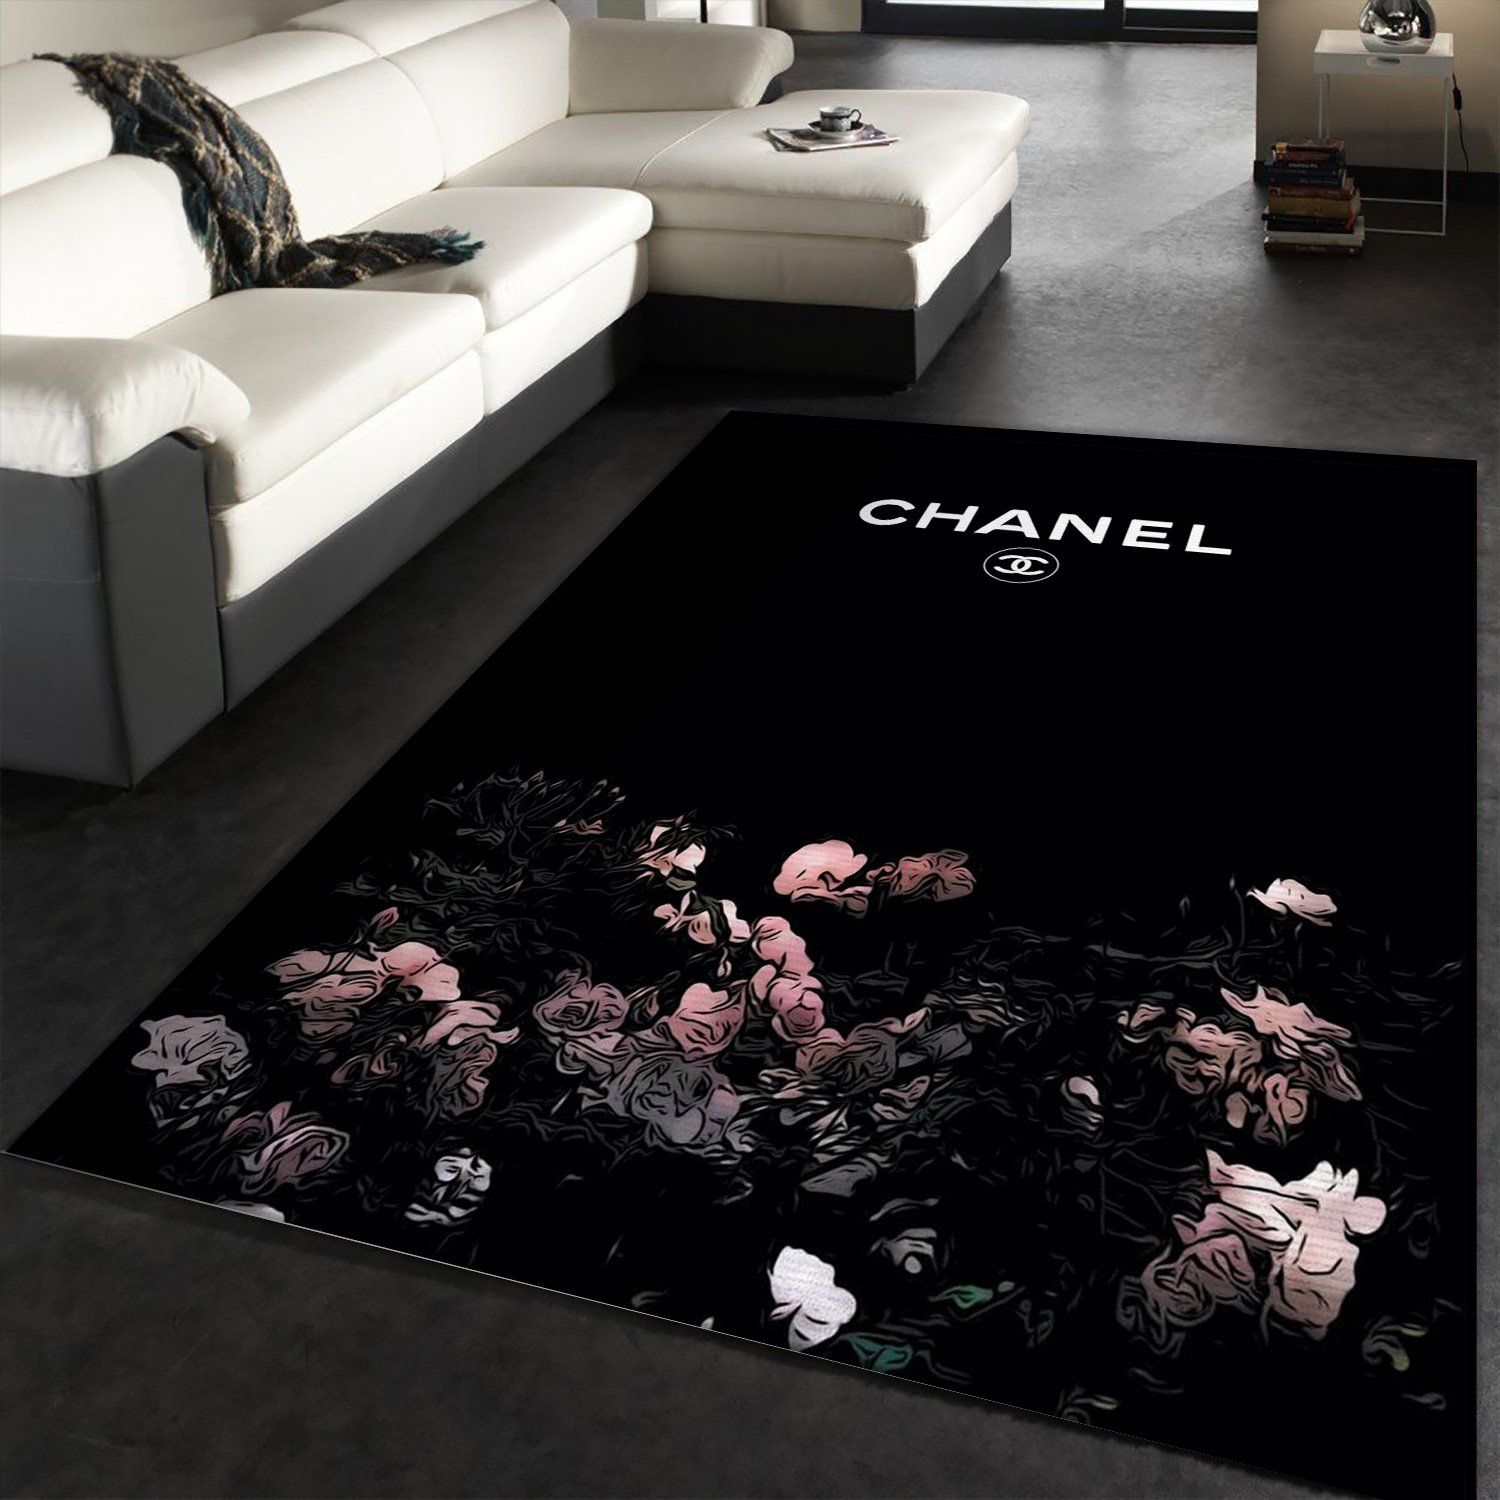 Chanel Area Rugs Living Room Rug Floor Decor Home Decor - Travels